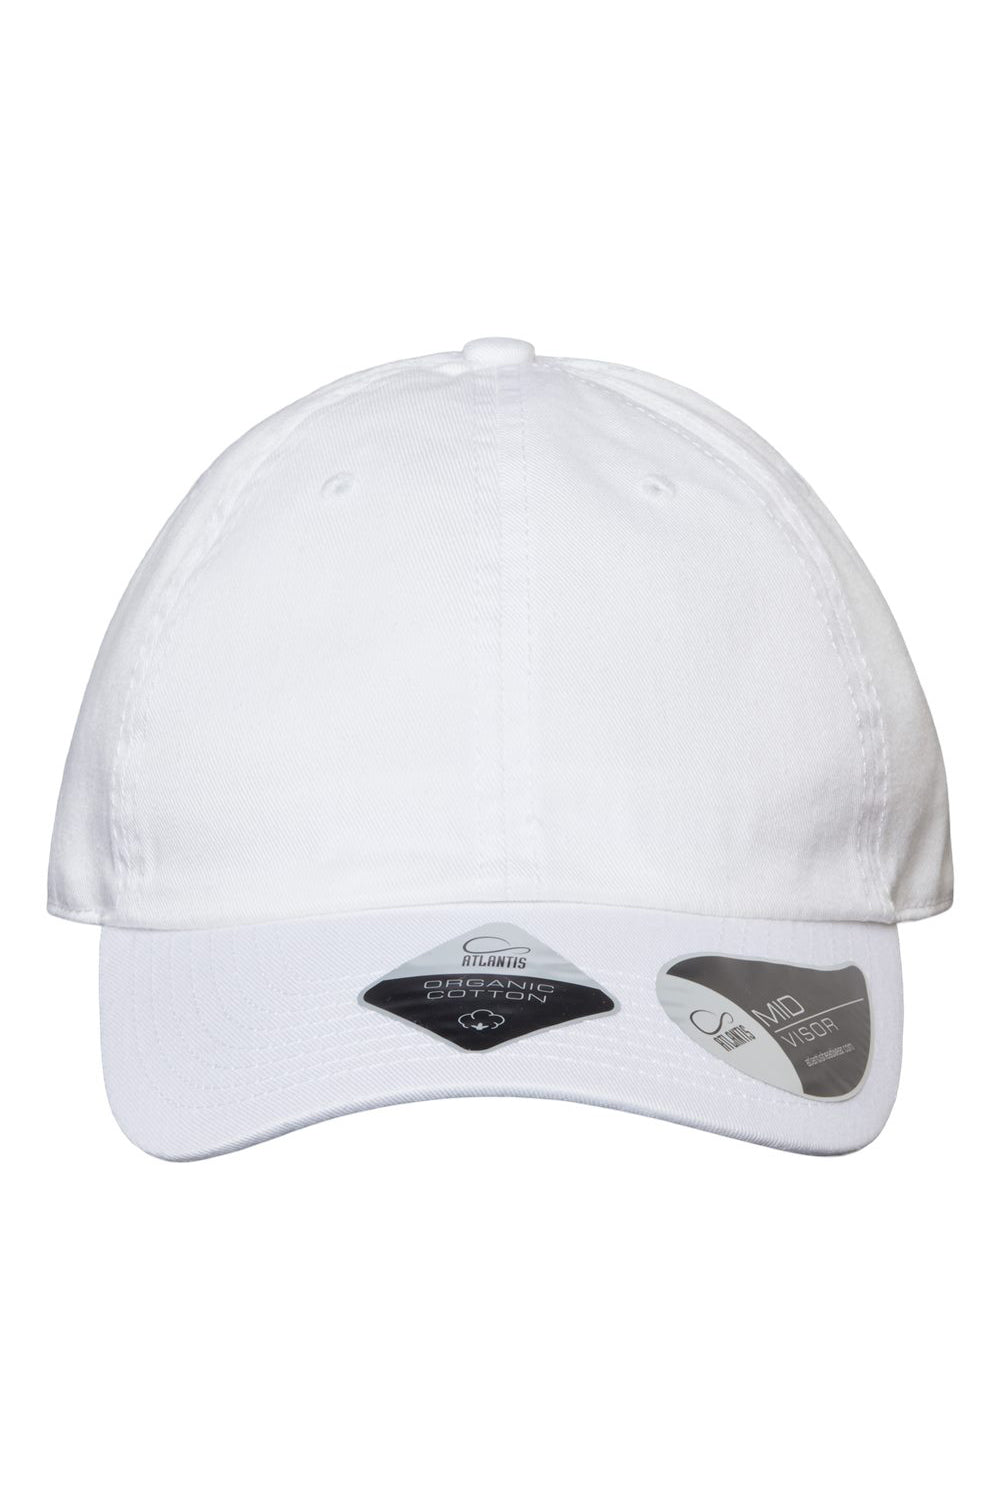 Atlantis Headwear FRASER Mens Sustainable Adjustable Dad Hat White Flat Front